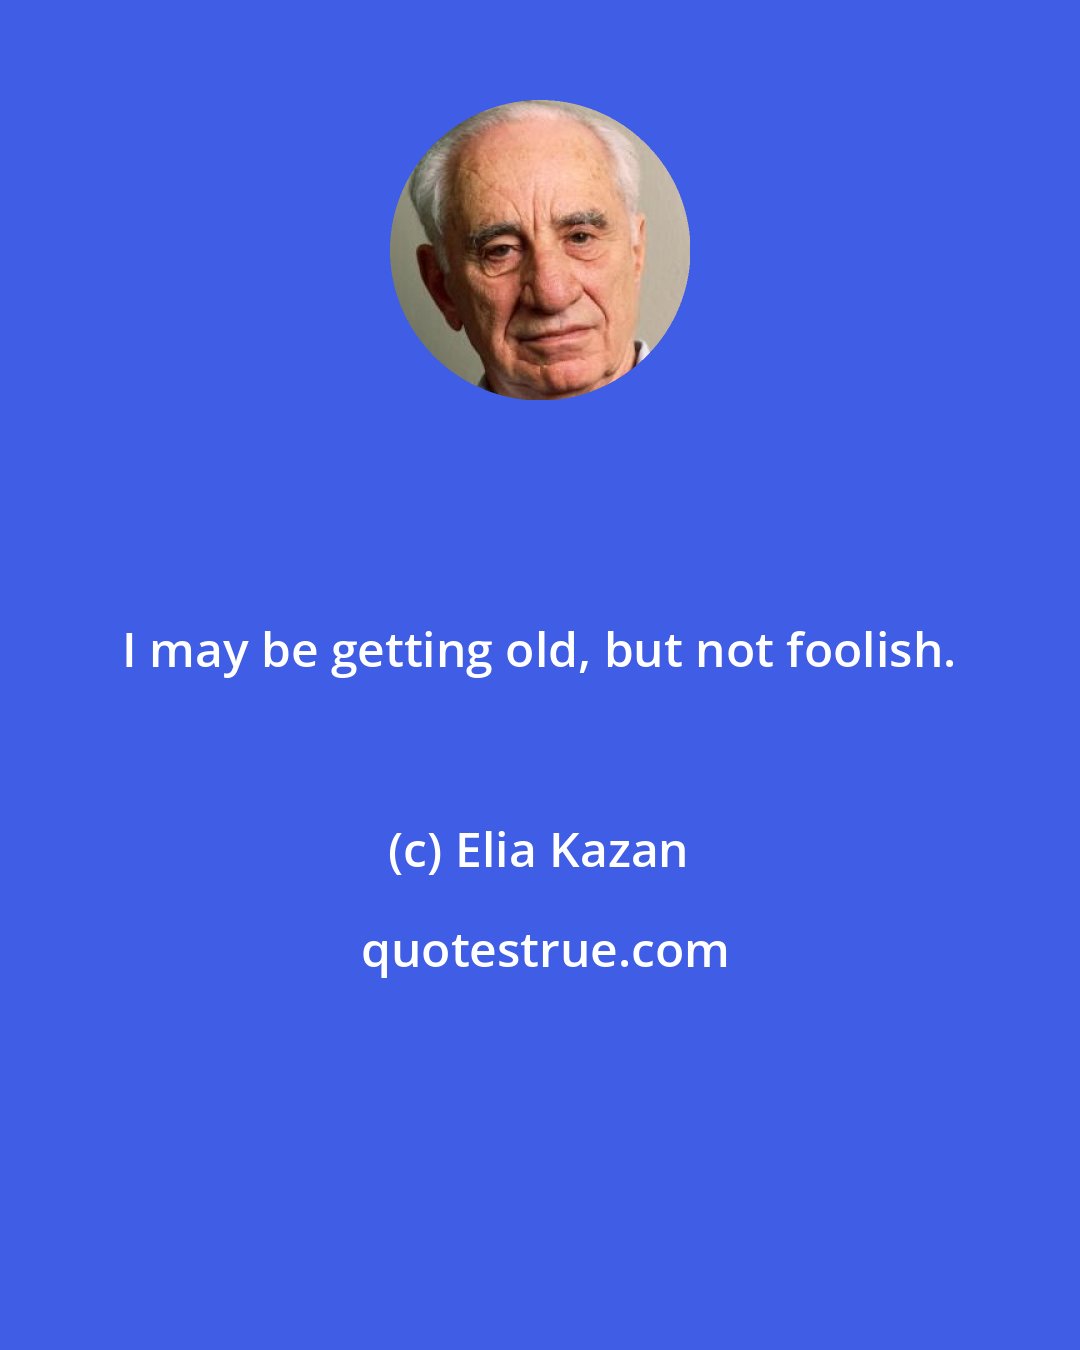 Elia Kazan: I may be getting old, but not foolish.